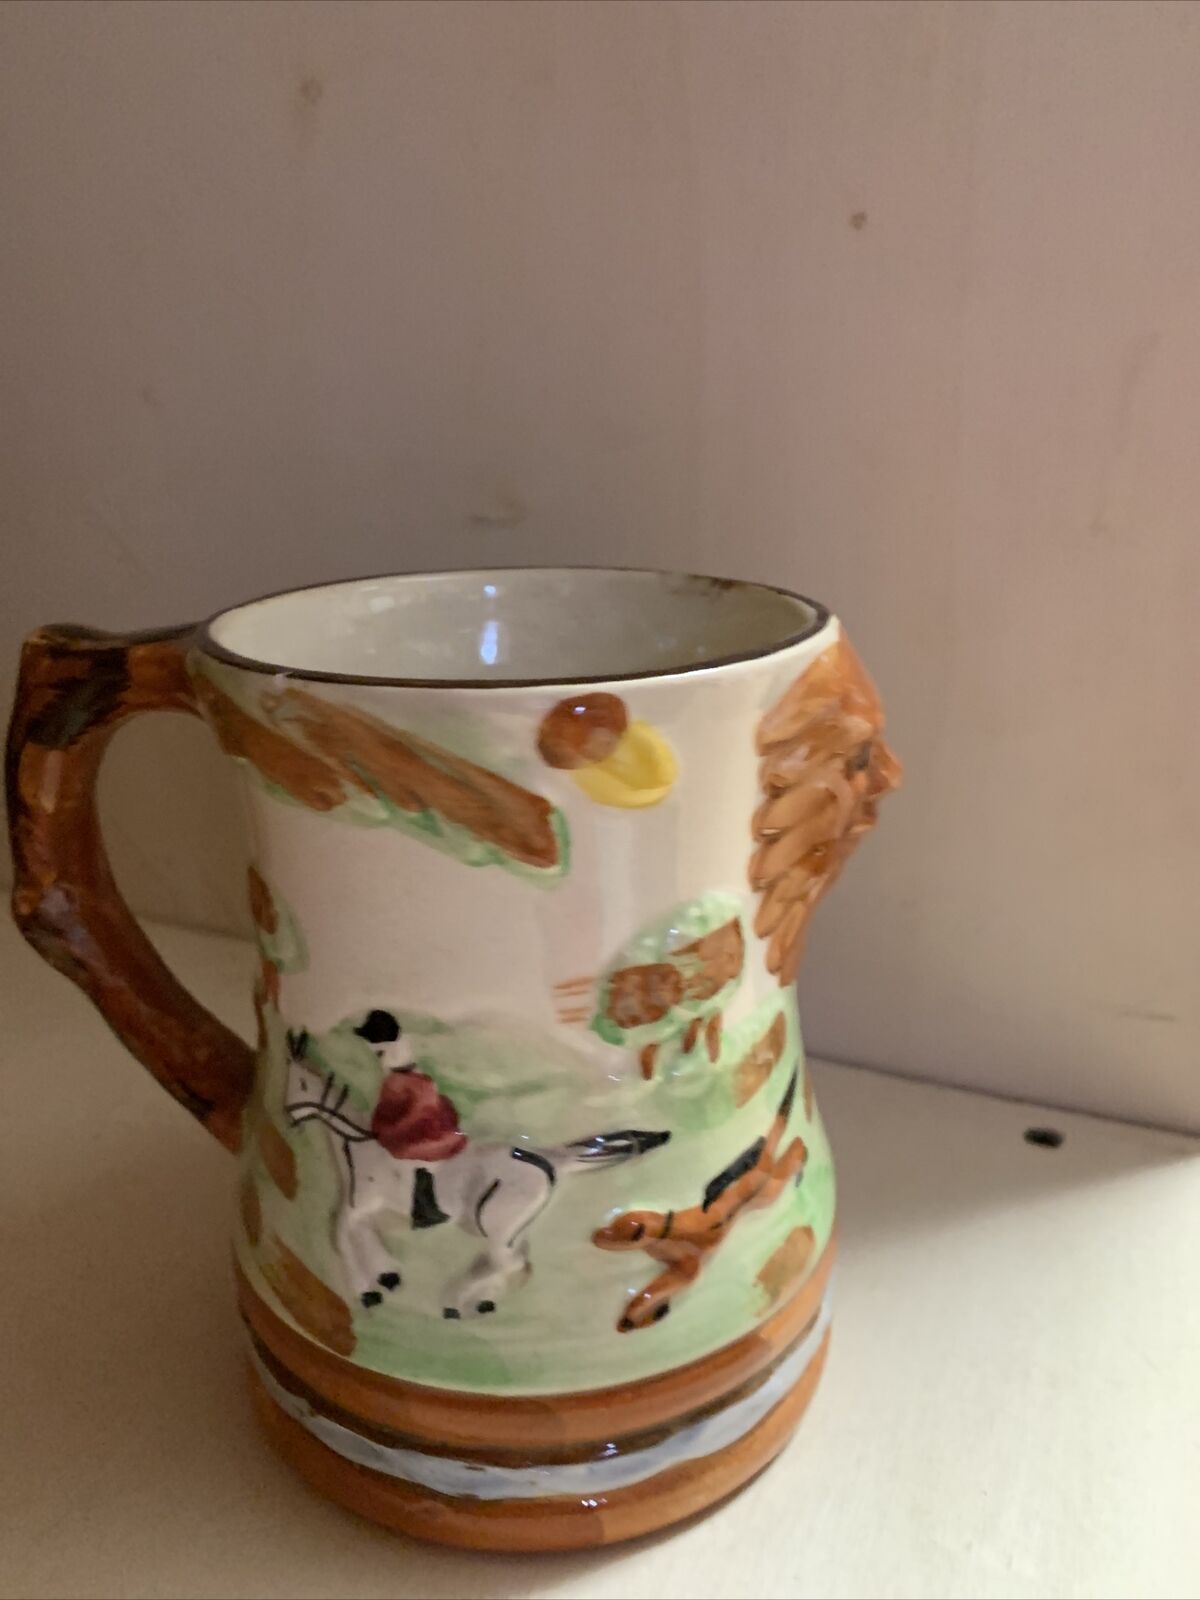 Antique Arthur Wood Mug made in England Earthenware Hunting Sun 1904 - 1928 K6